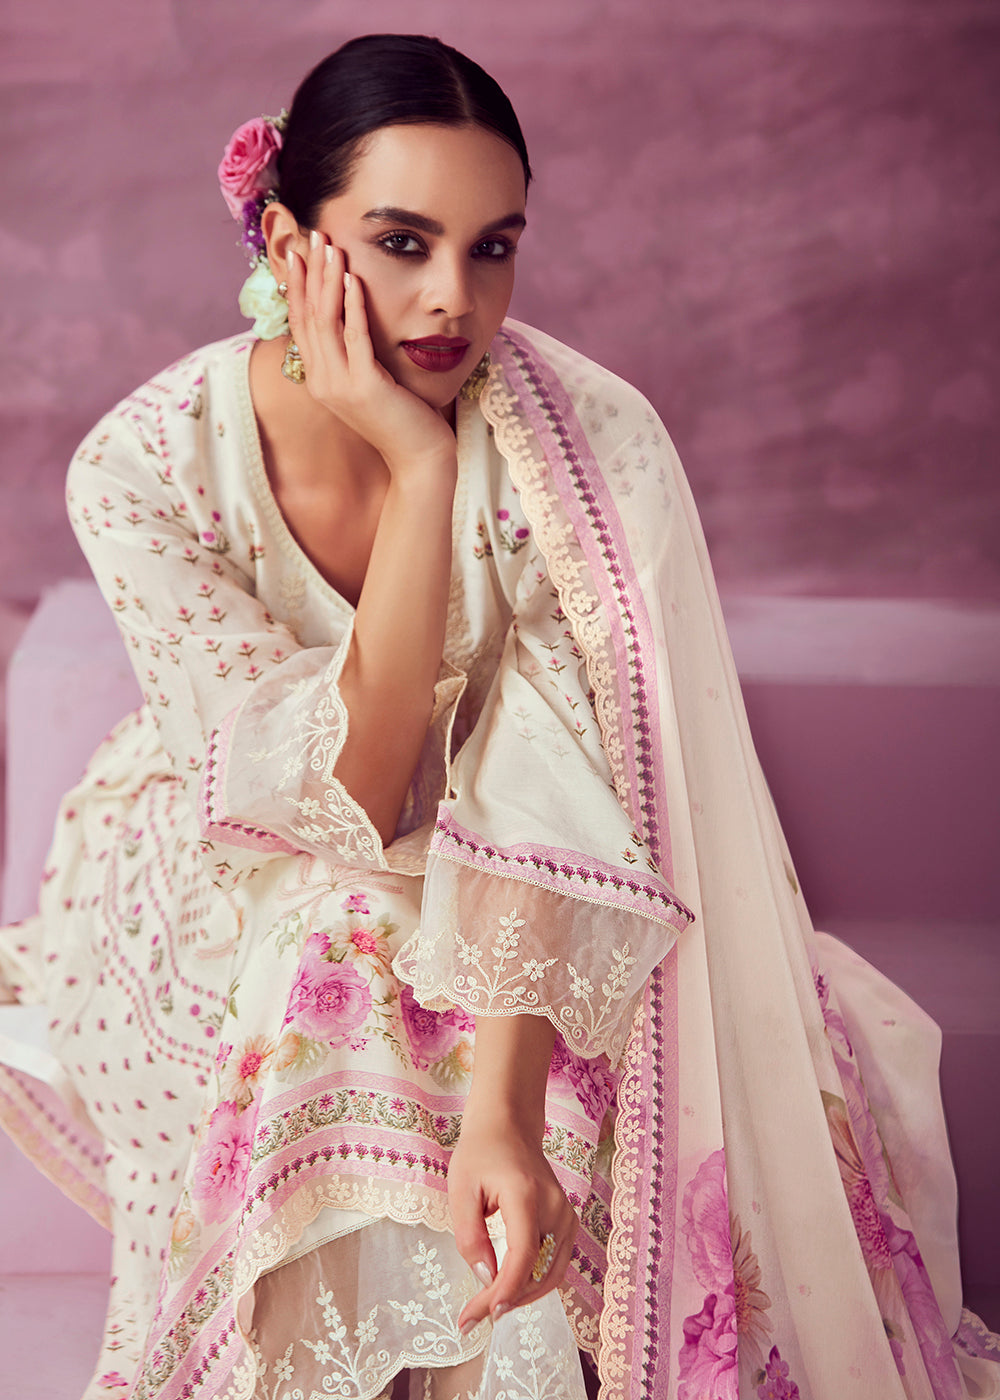 Buy Now Ivory & Pink Muslin Cotton Printed Trendy Salwar Kurta Set Online in USA, UK, Canada, Germany, Australia & Worldwide at Empress Clothing.